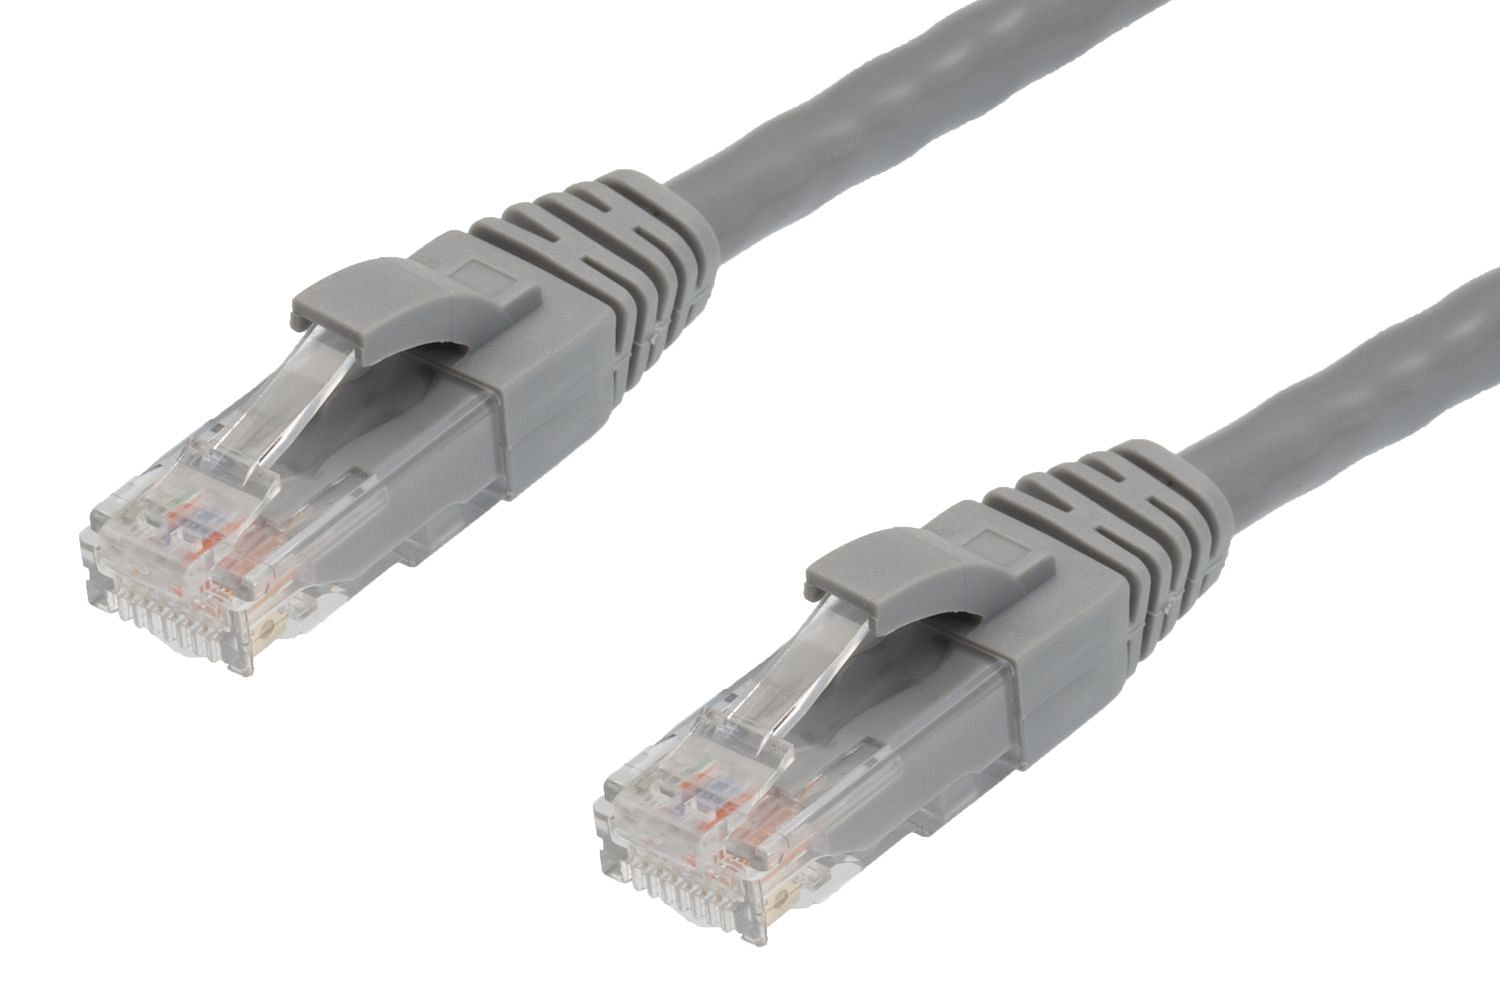 1m cat5 ethernet patch cable